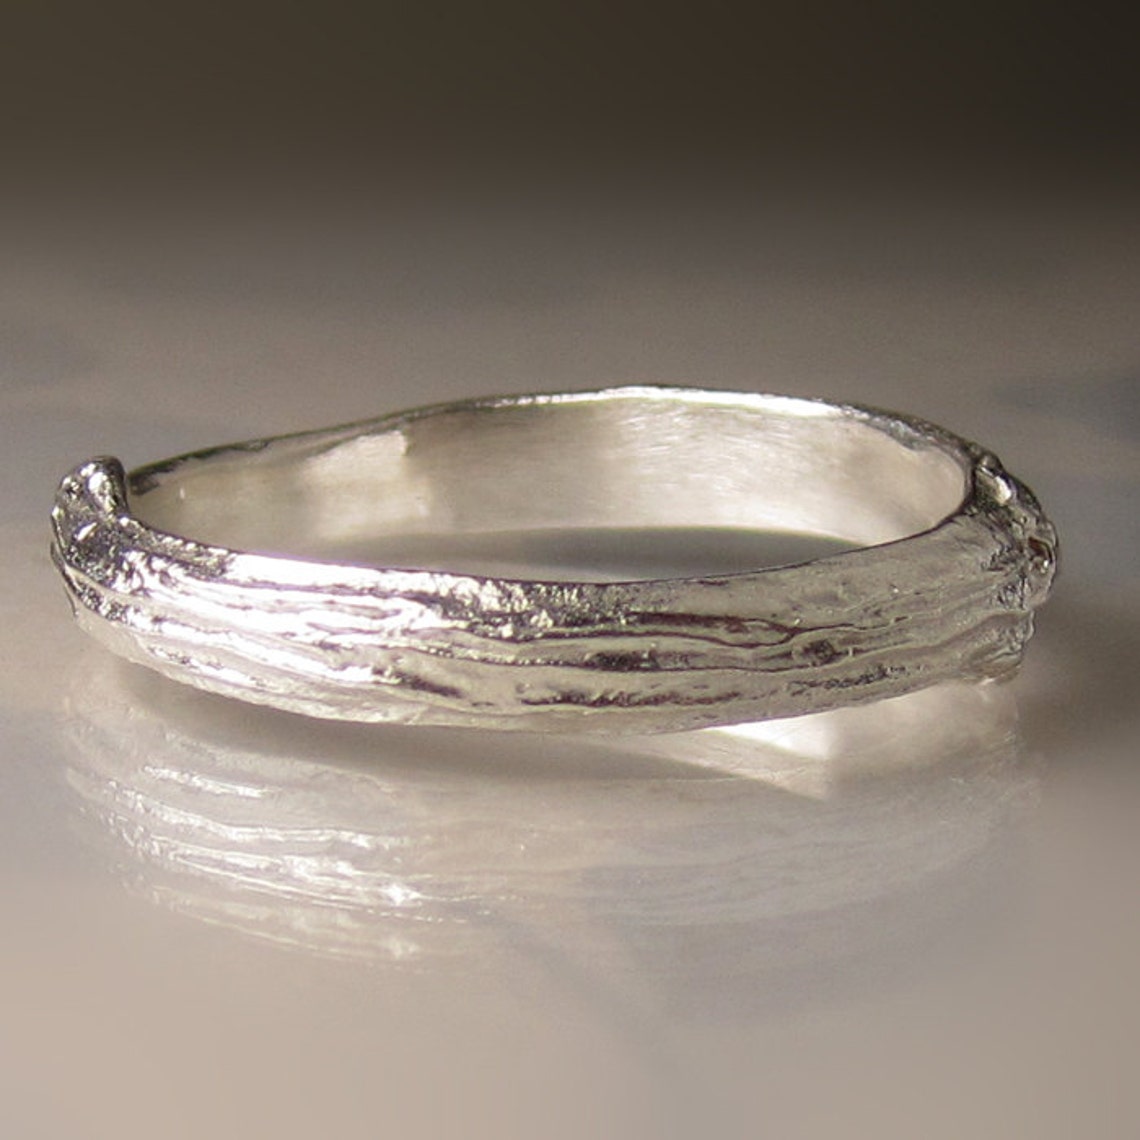 Men's Branch Ring in Sterling Silver Sterling Silver - Etsy